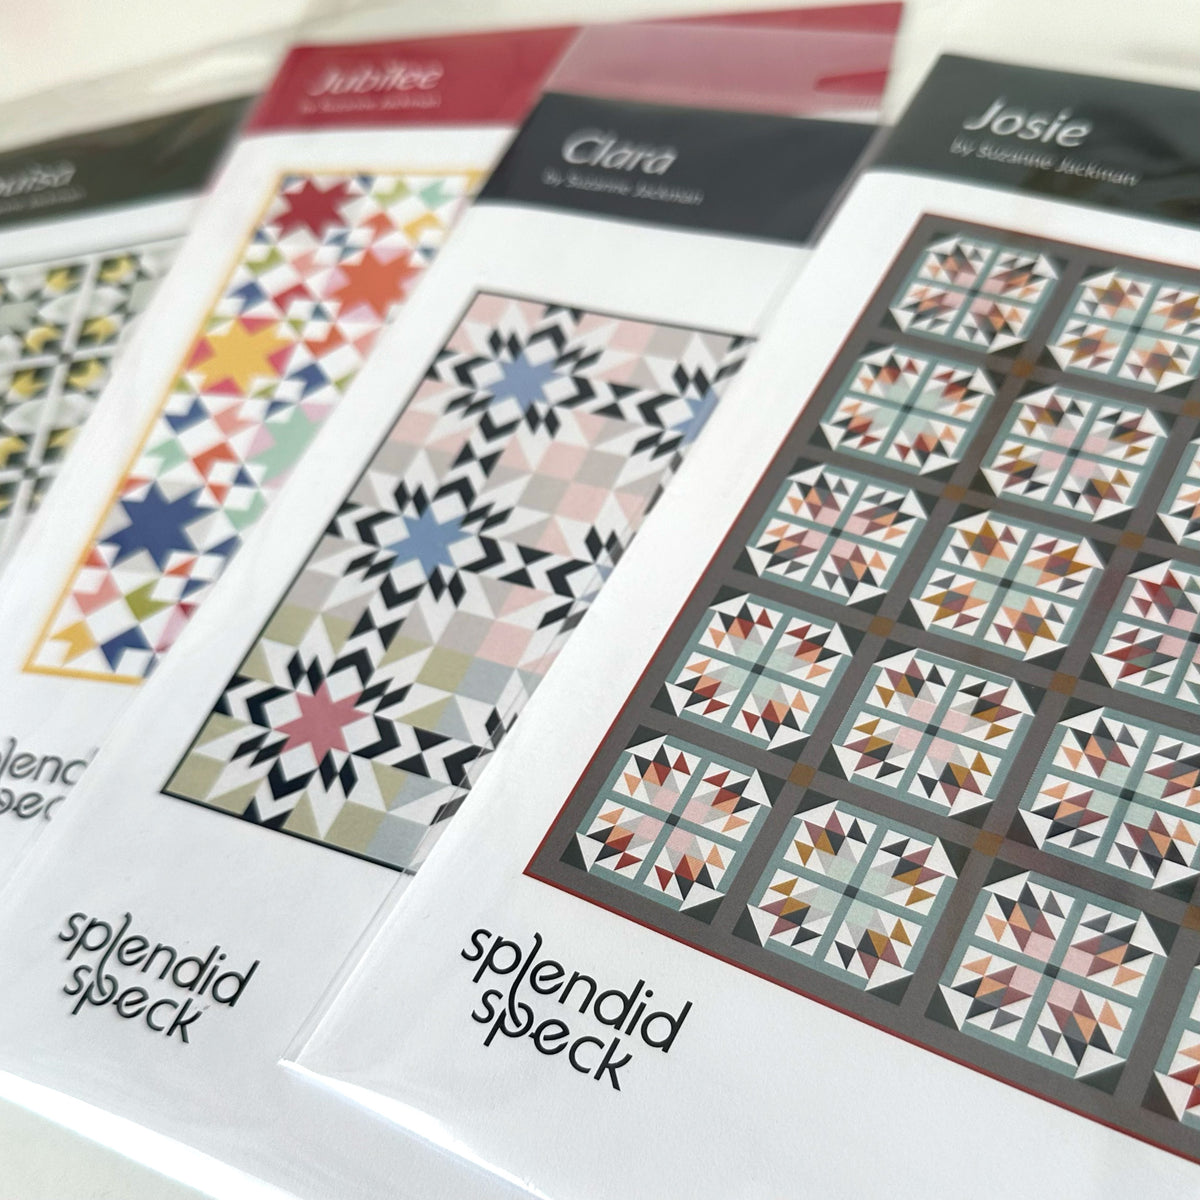 Splendid Speck Quilt Patterns